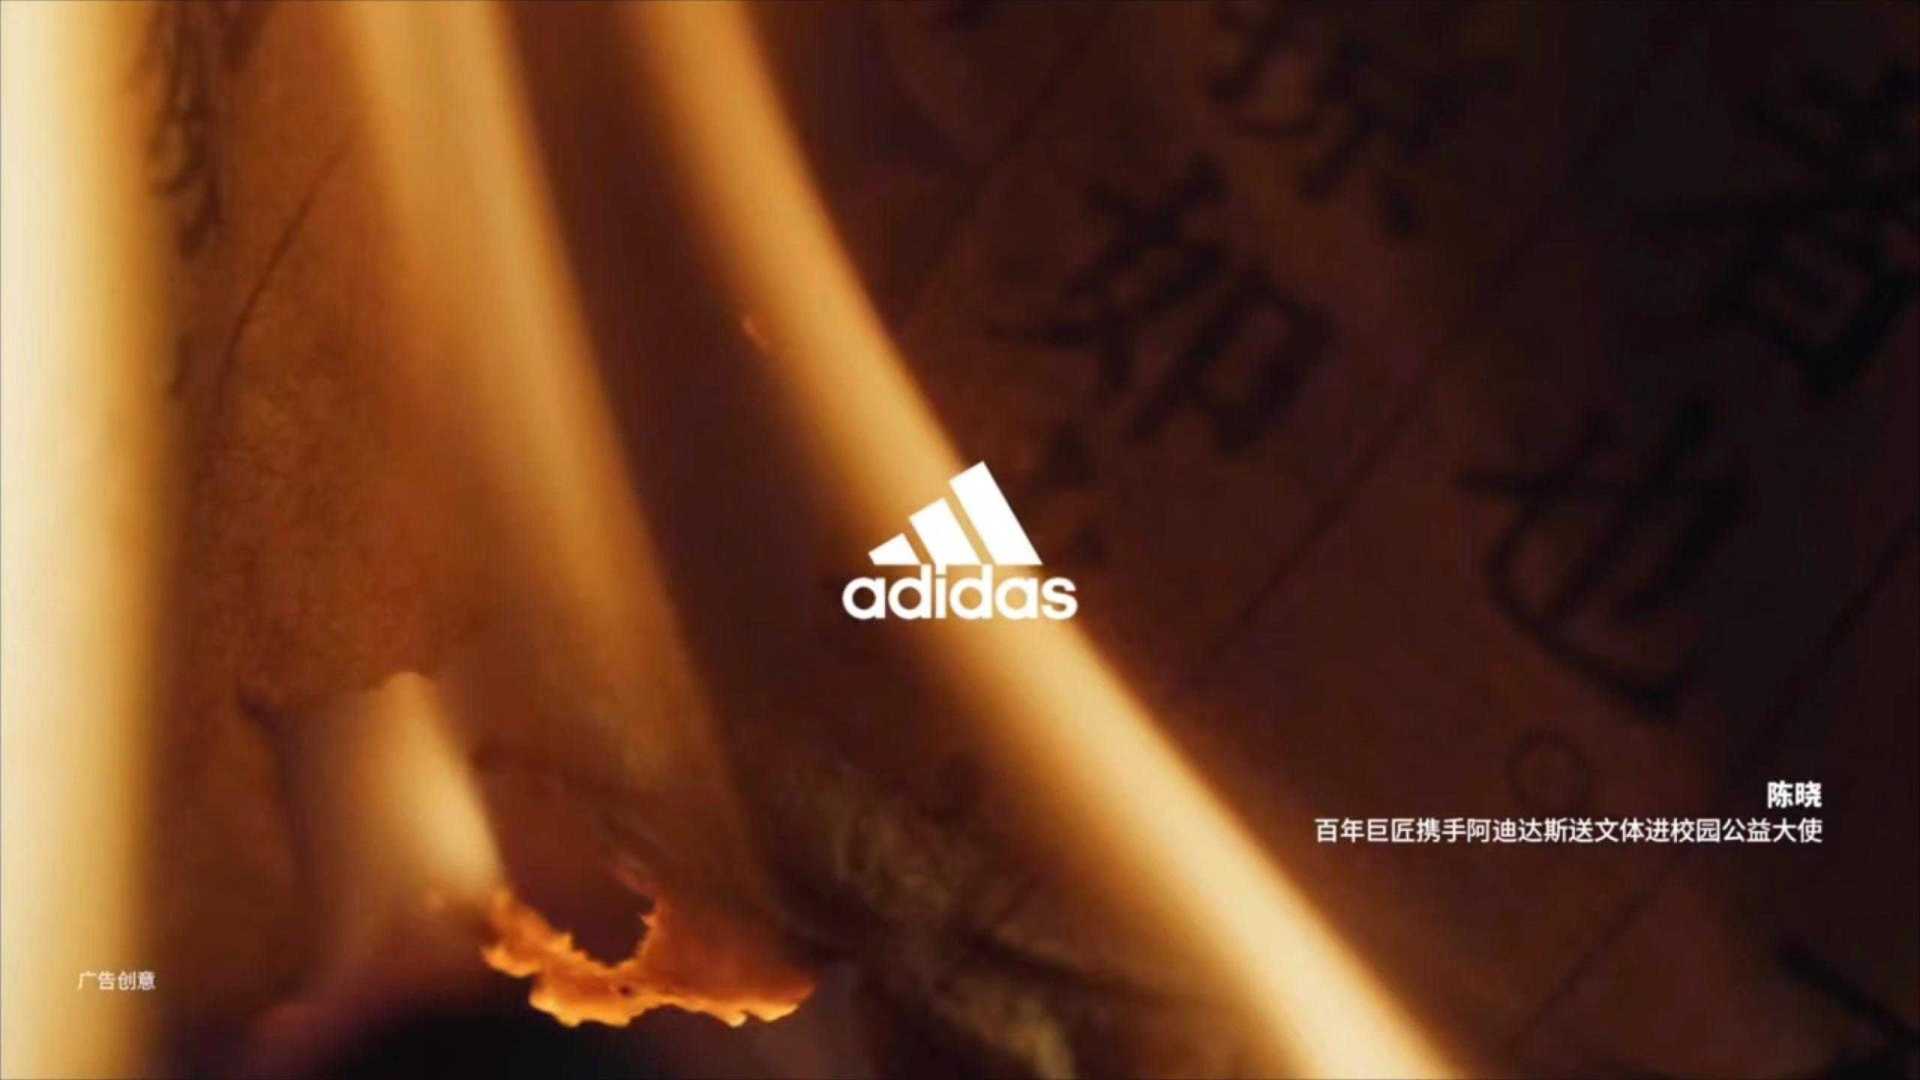 adidas | 陈晓 × 武极 风林山火